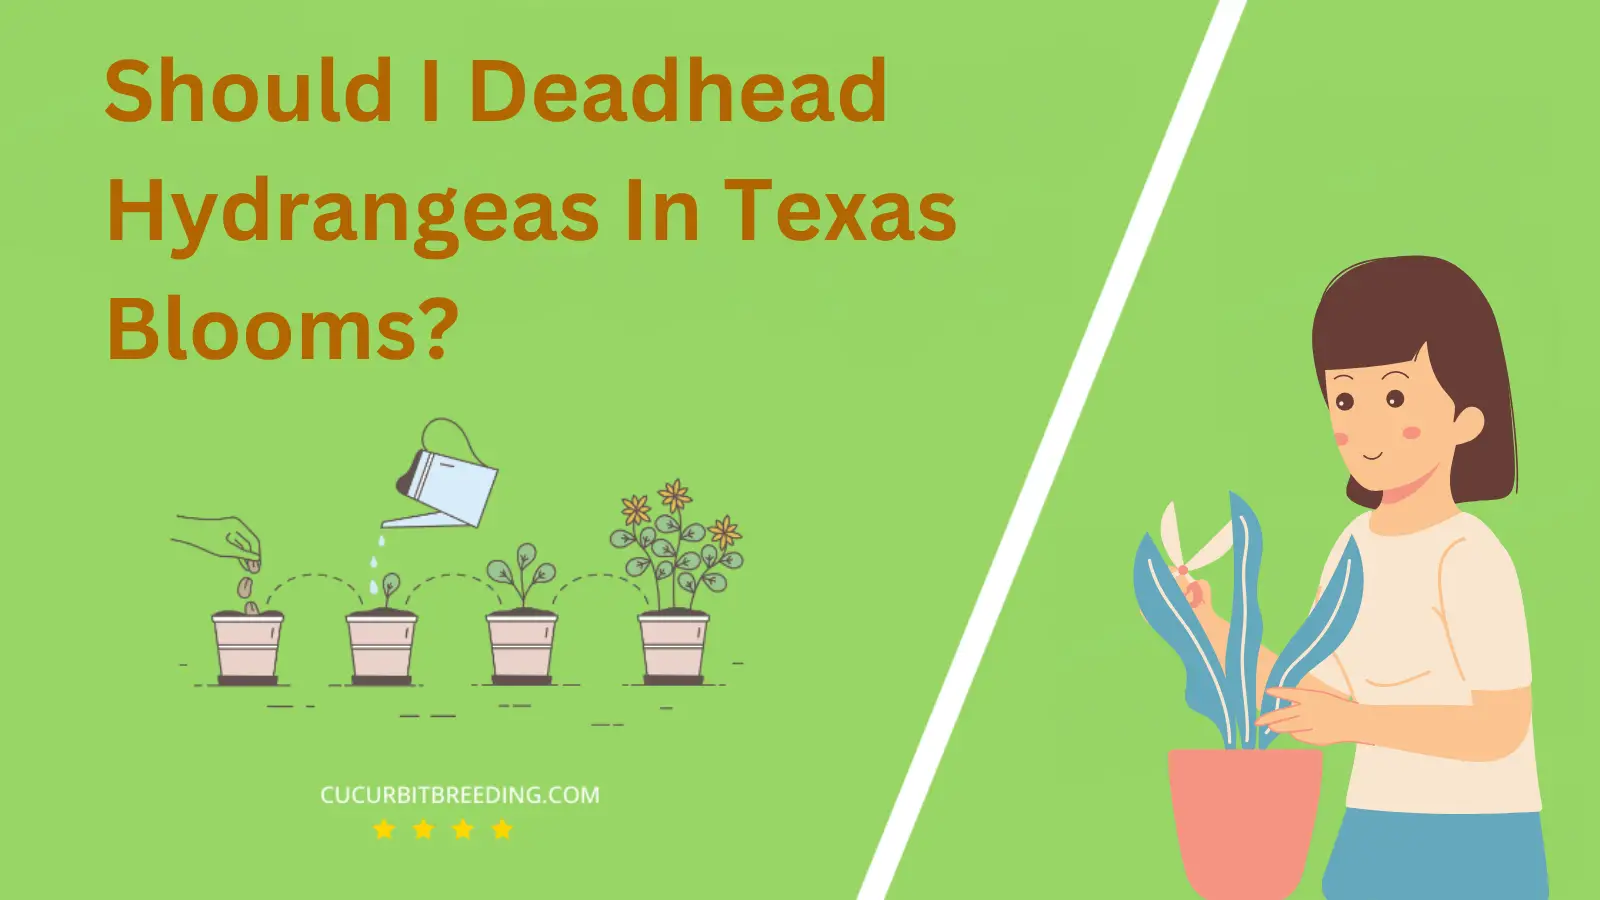 Should I Deadhead Hydrangeas In Texas Blooms?